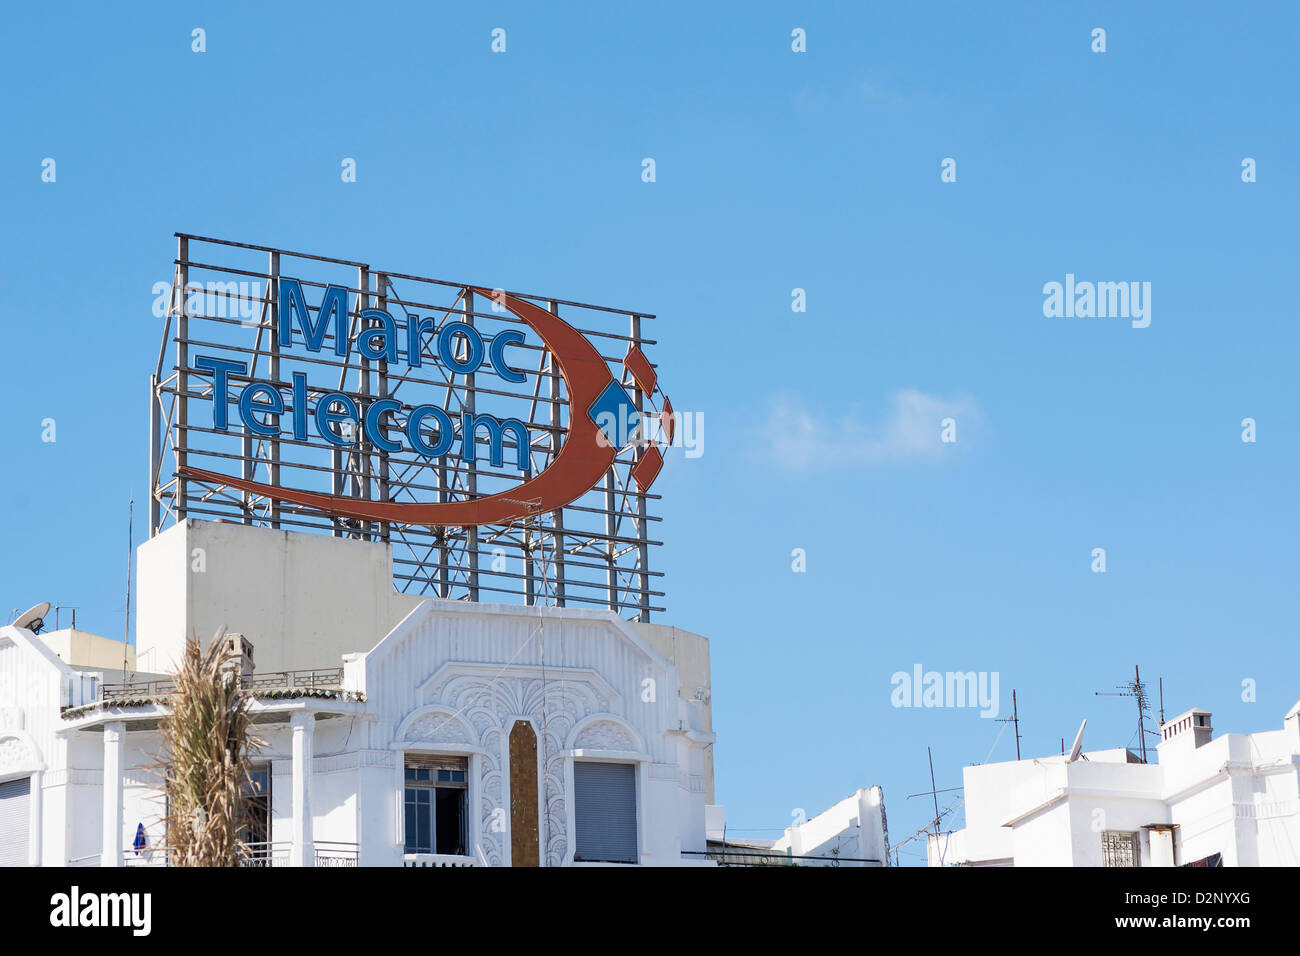 Maroc Telecom advertising sign Stock Photo